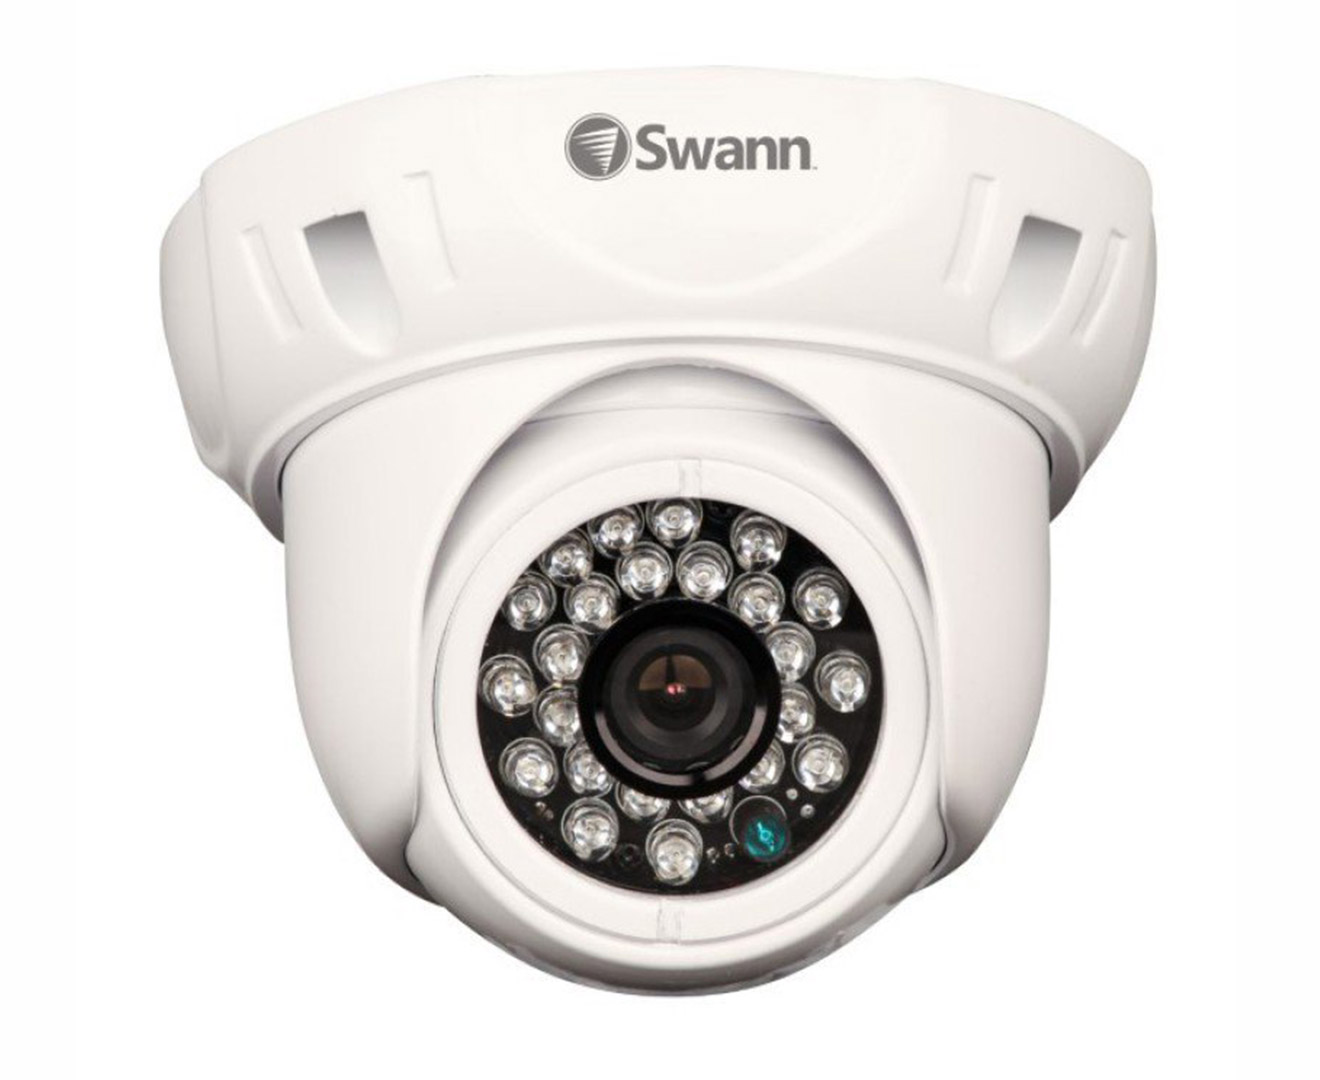 Swann DVR8-3425 Digital Video Recorder & 15” LCD Monitor | Mumgo.com.au